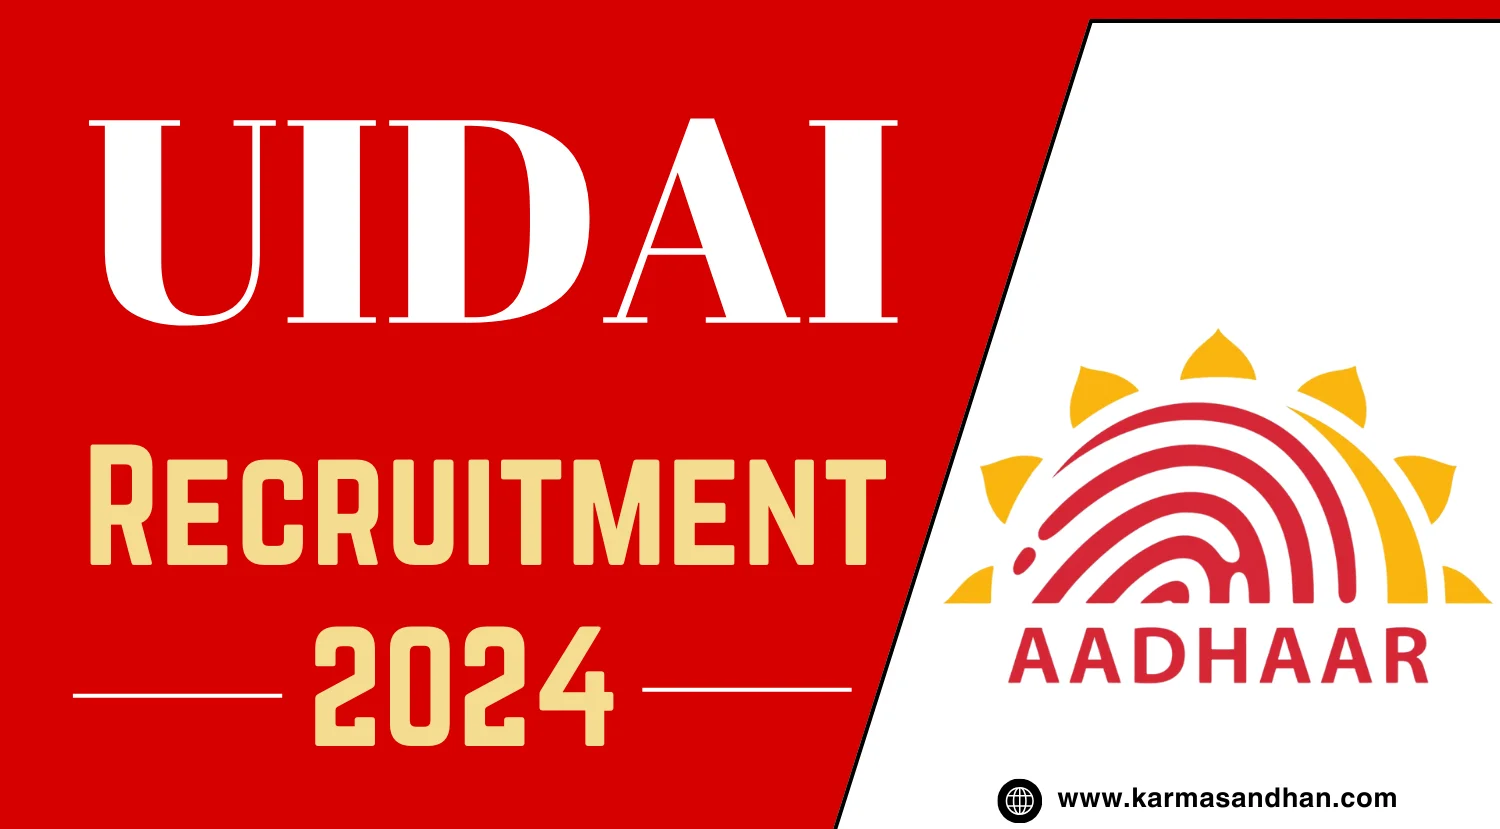 UIDAI Director Recruitment 2024